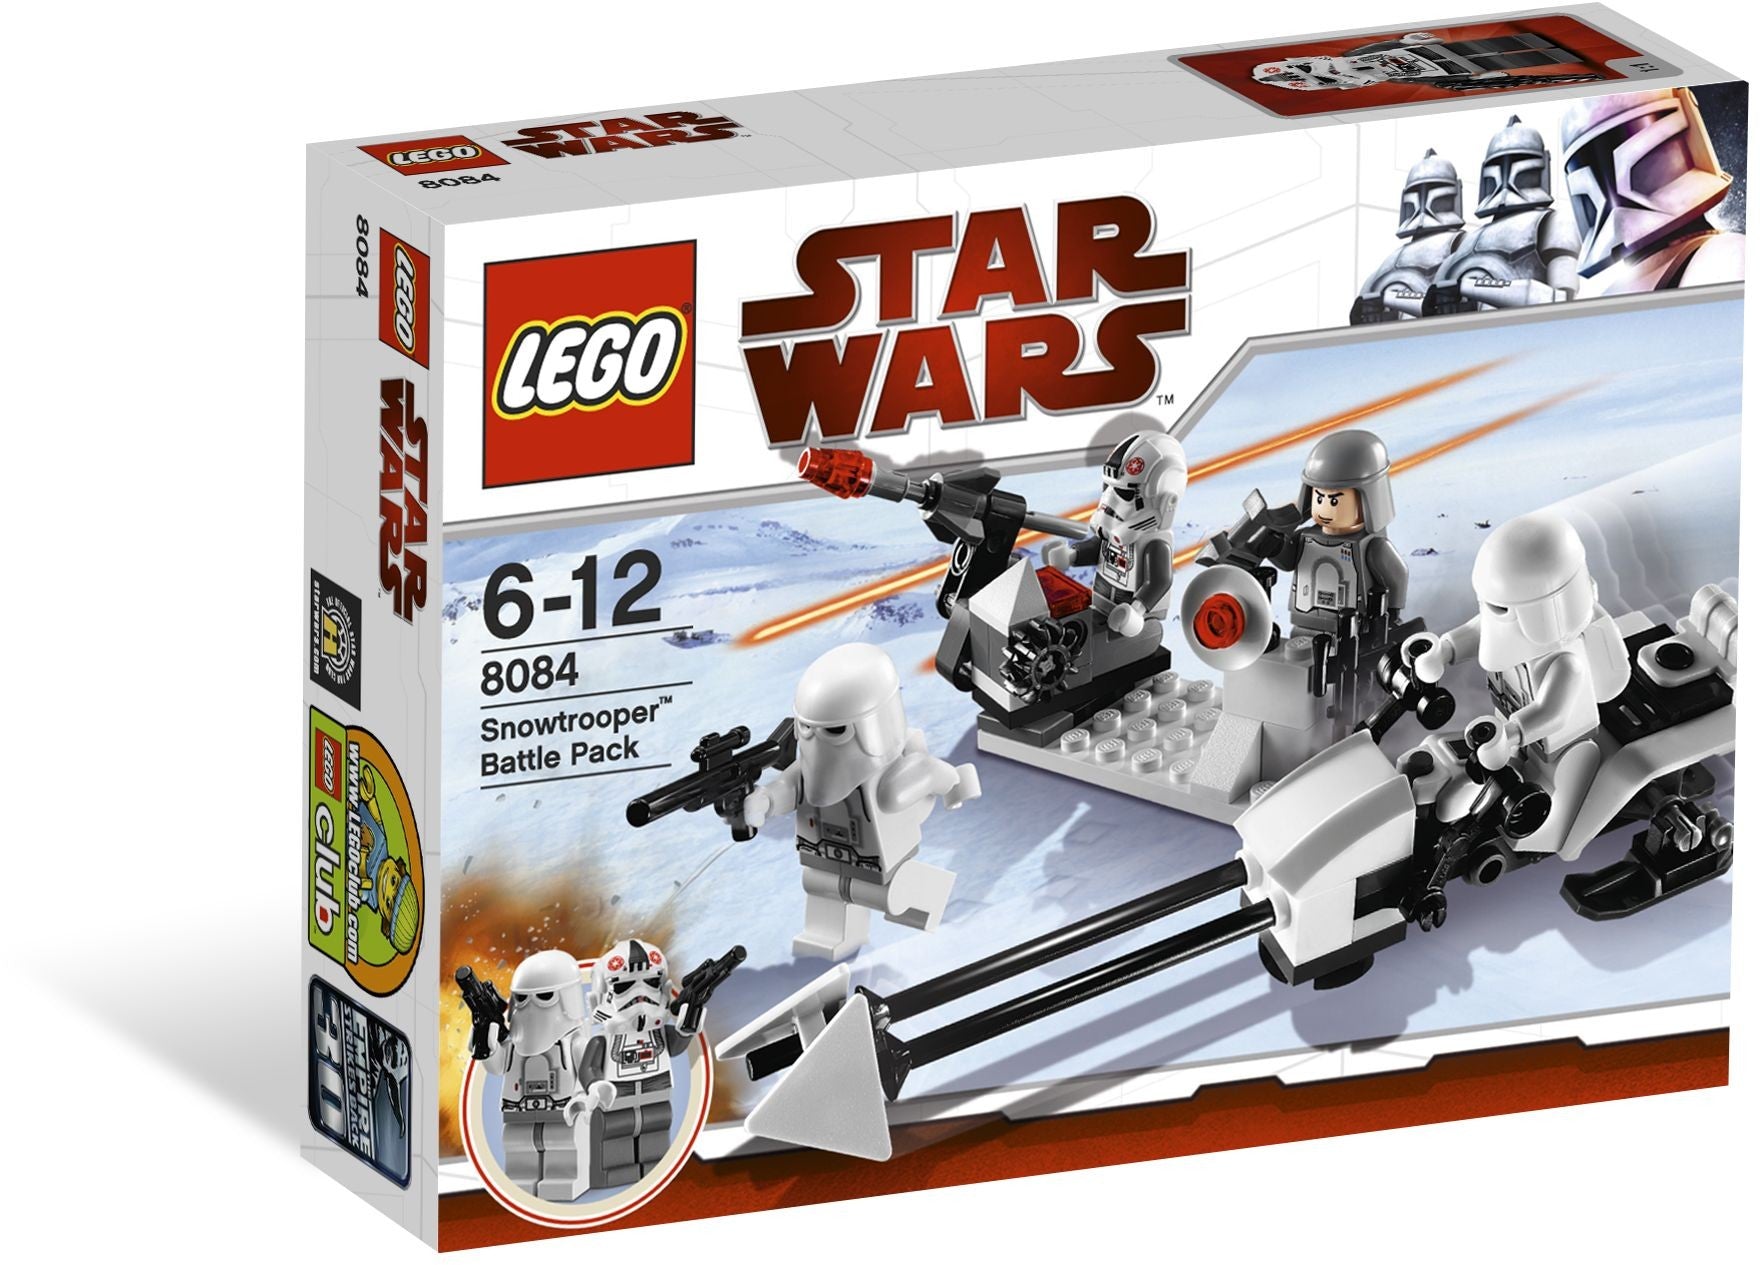 Lego Star Wars 8084 - Snowtrooper battlepack